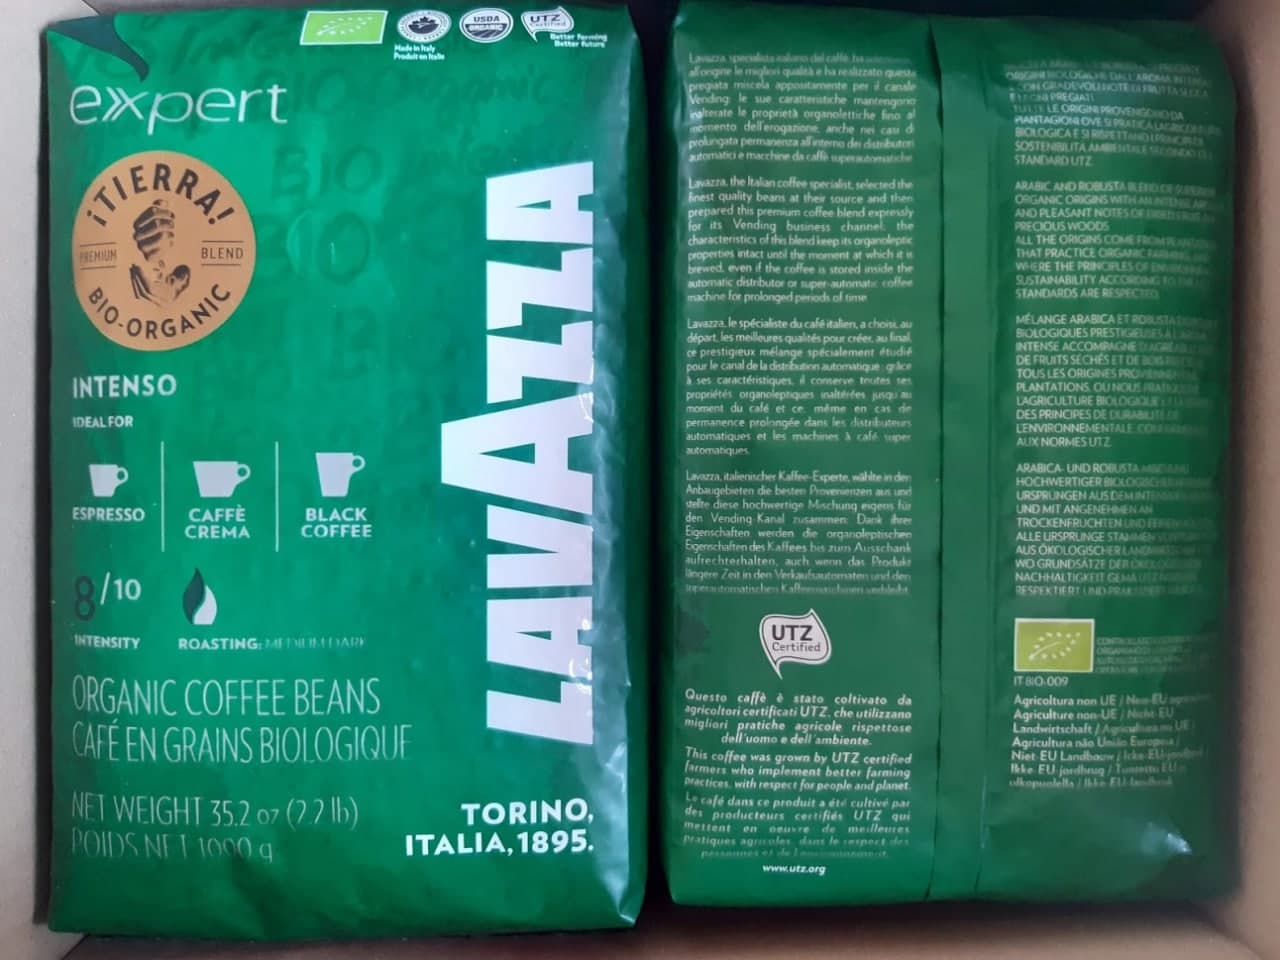 Зерновой кофе "LAVAZZA" Expert ¡Tierra! Bio Organic Intenso